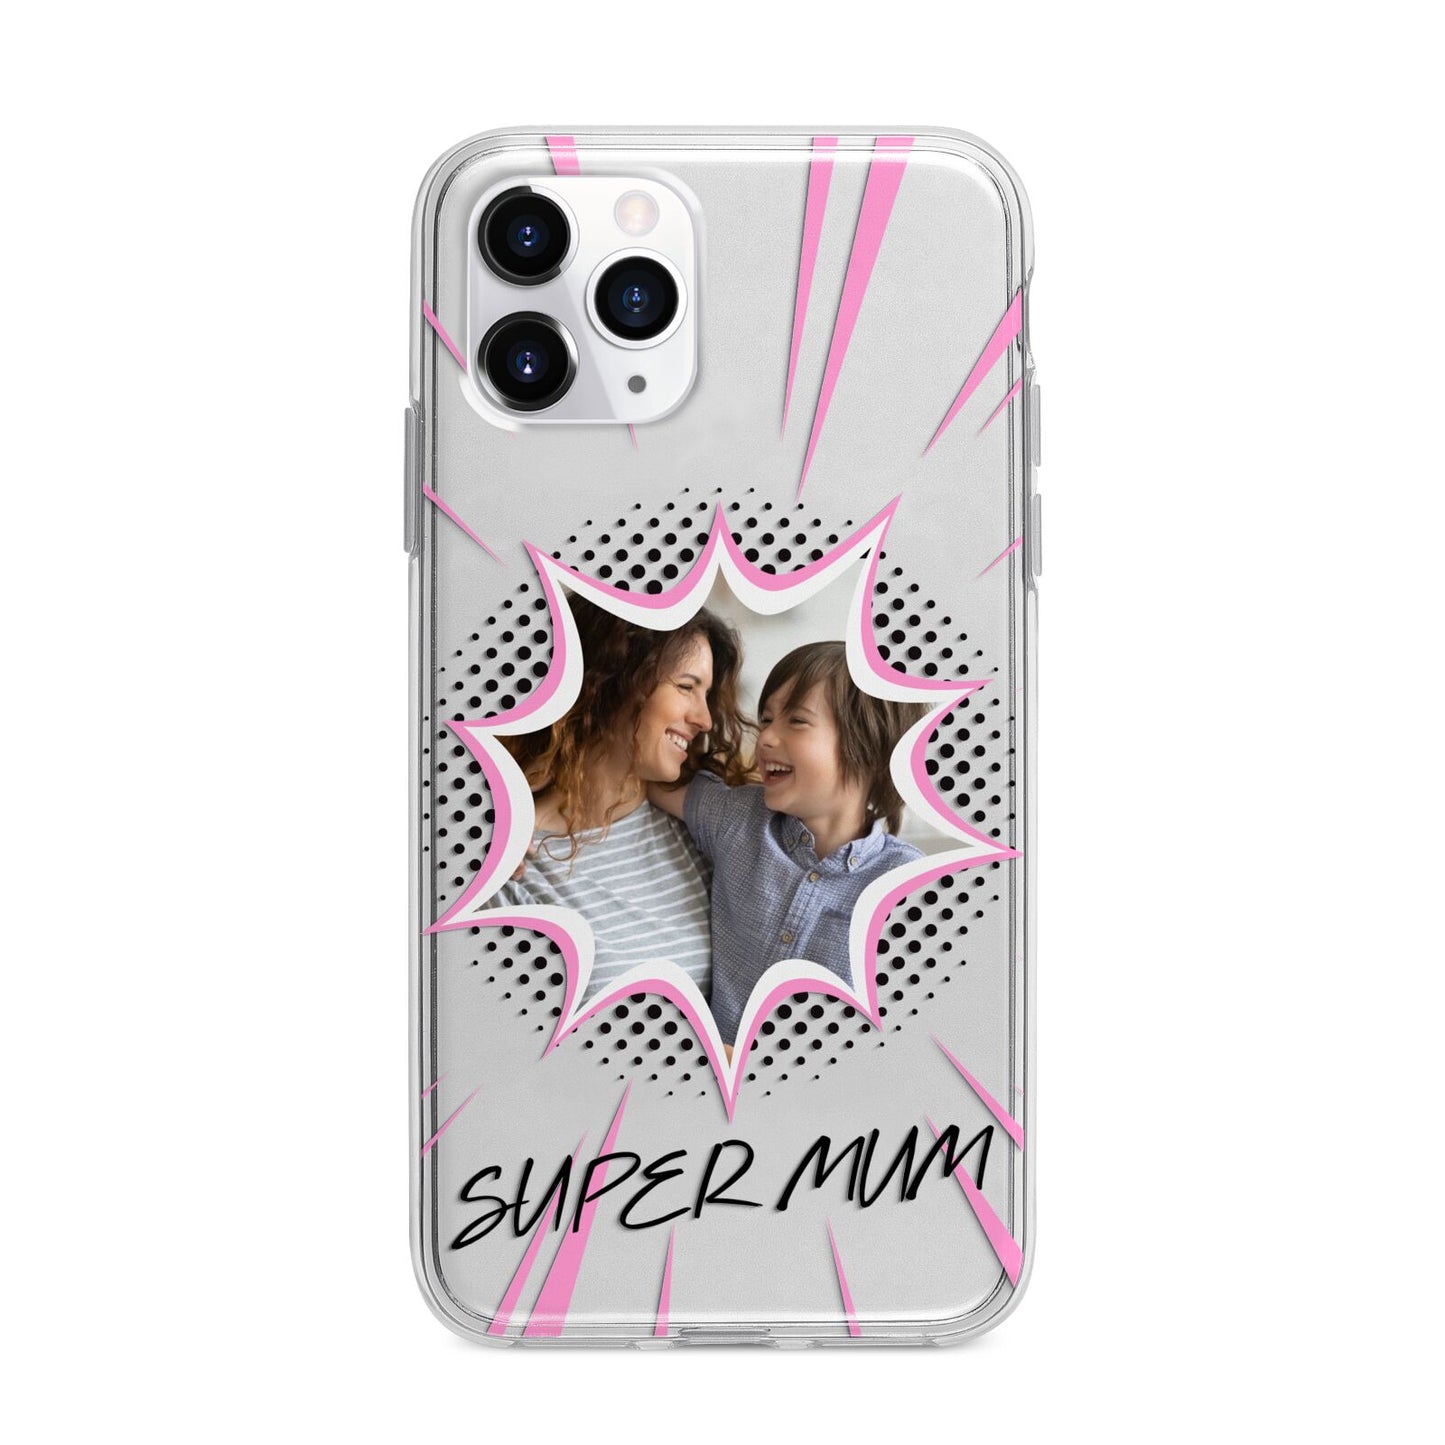 Super Mum Photo Apple iPhone 11 Pro Max in Silver with Bumper Case